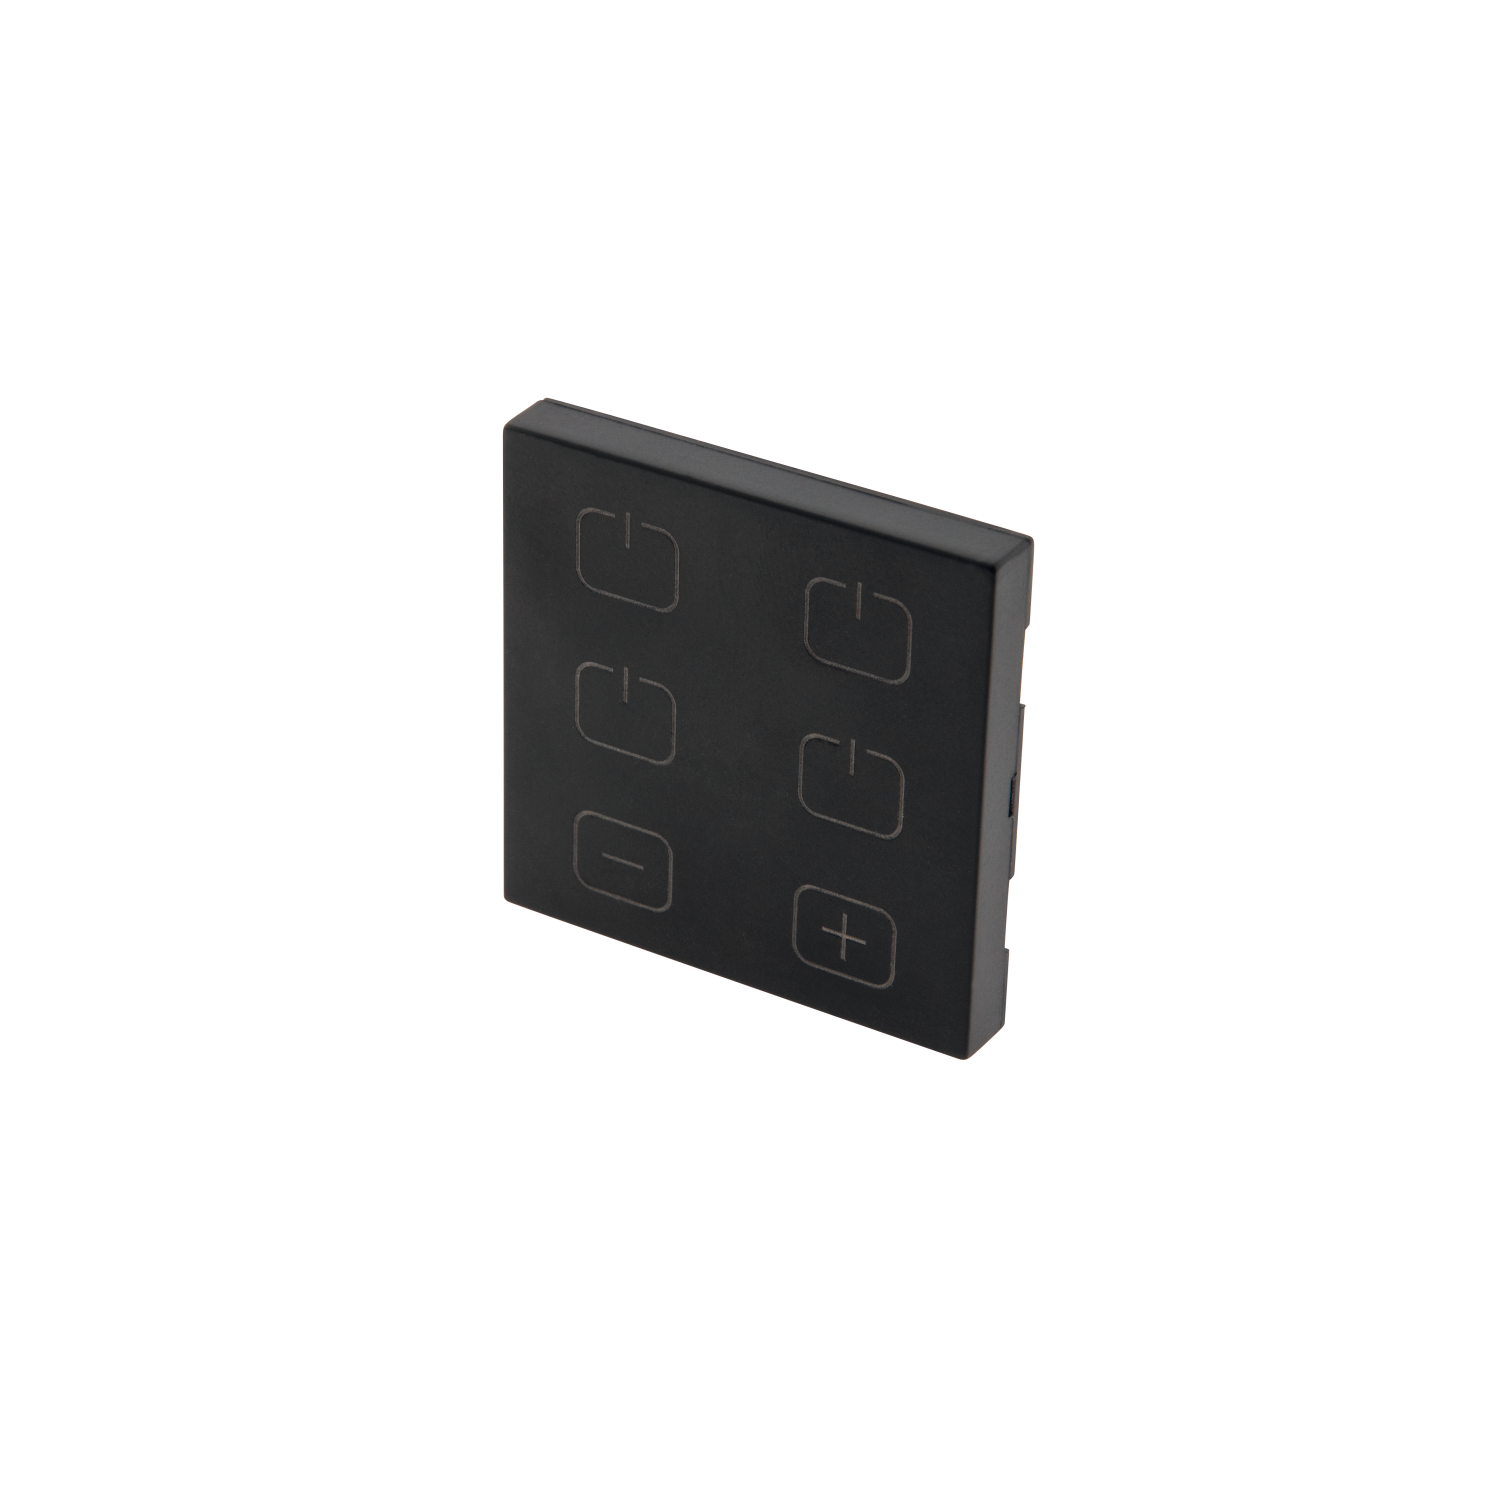 Switch Control Box Black